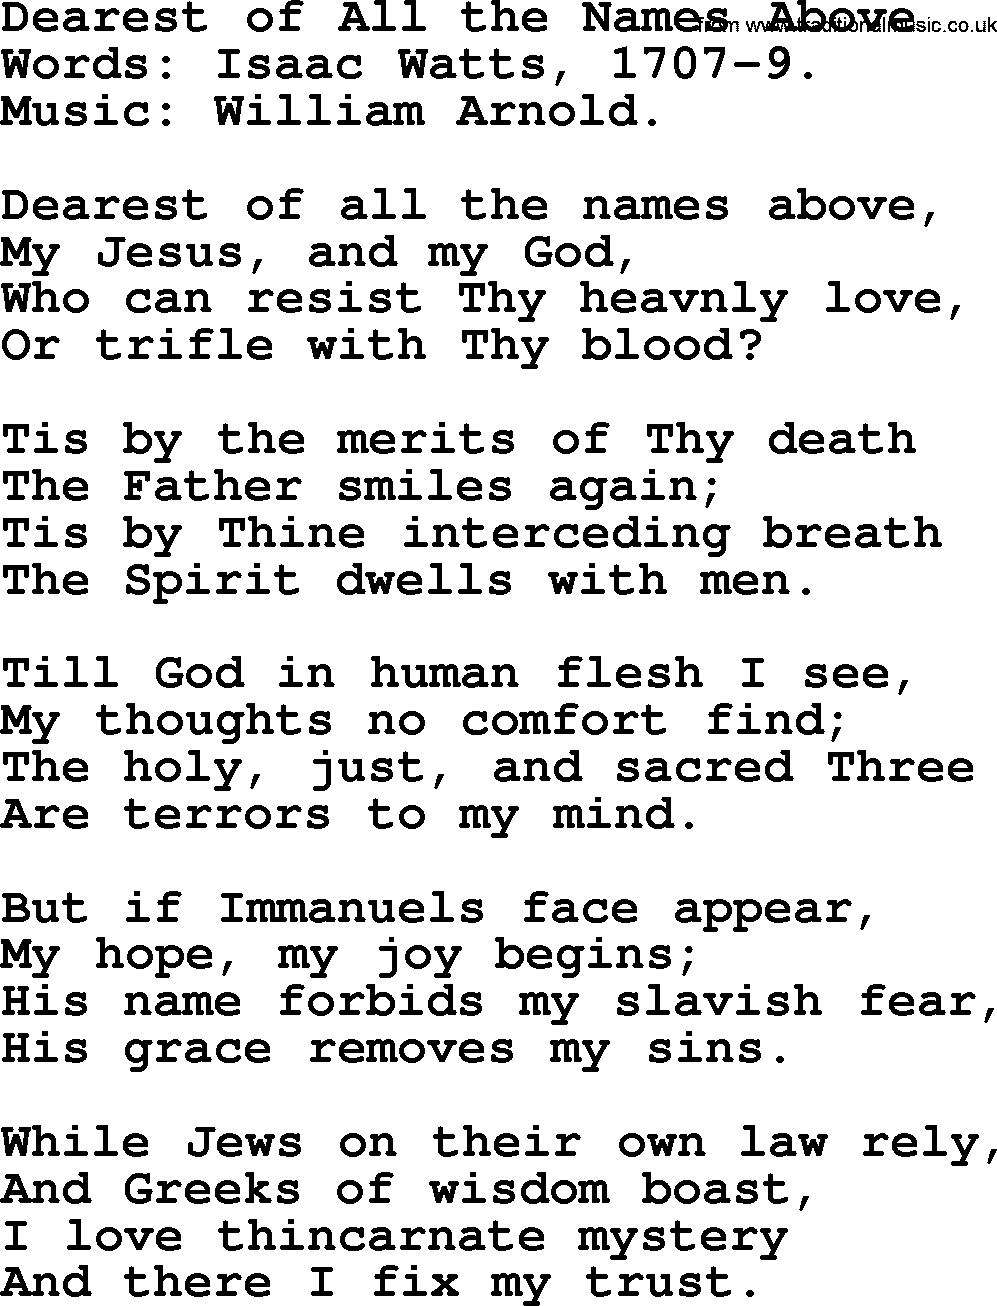 Isaac Watts Christian hymn: Dearest of All the Names Above- lyricss